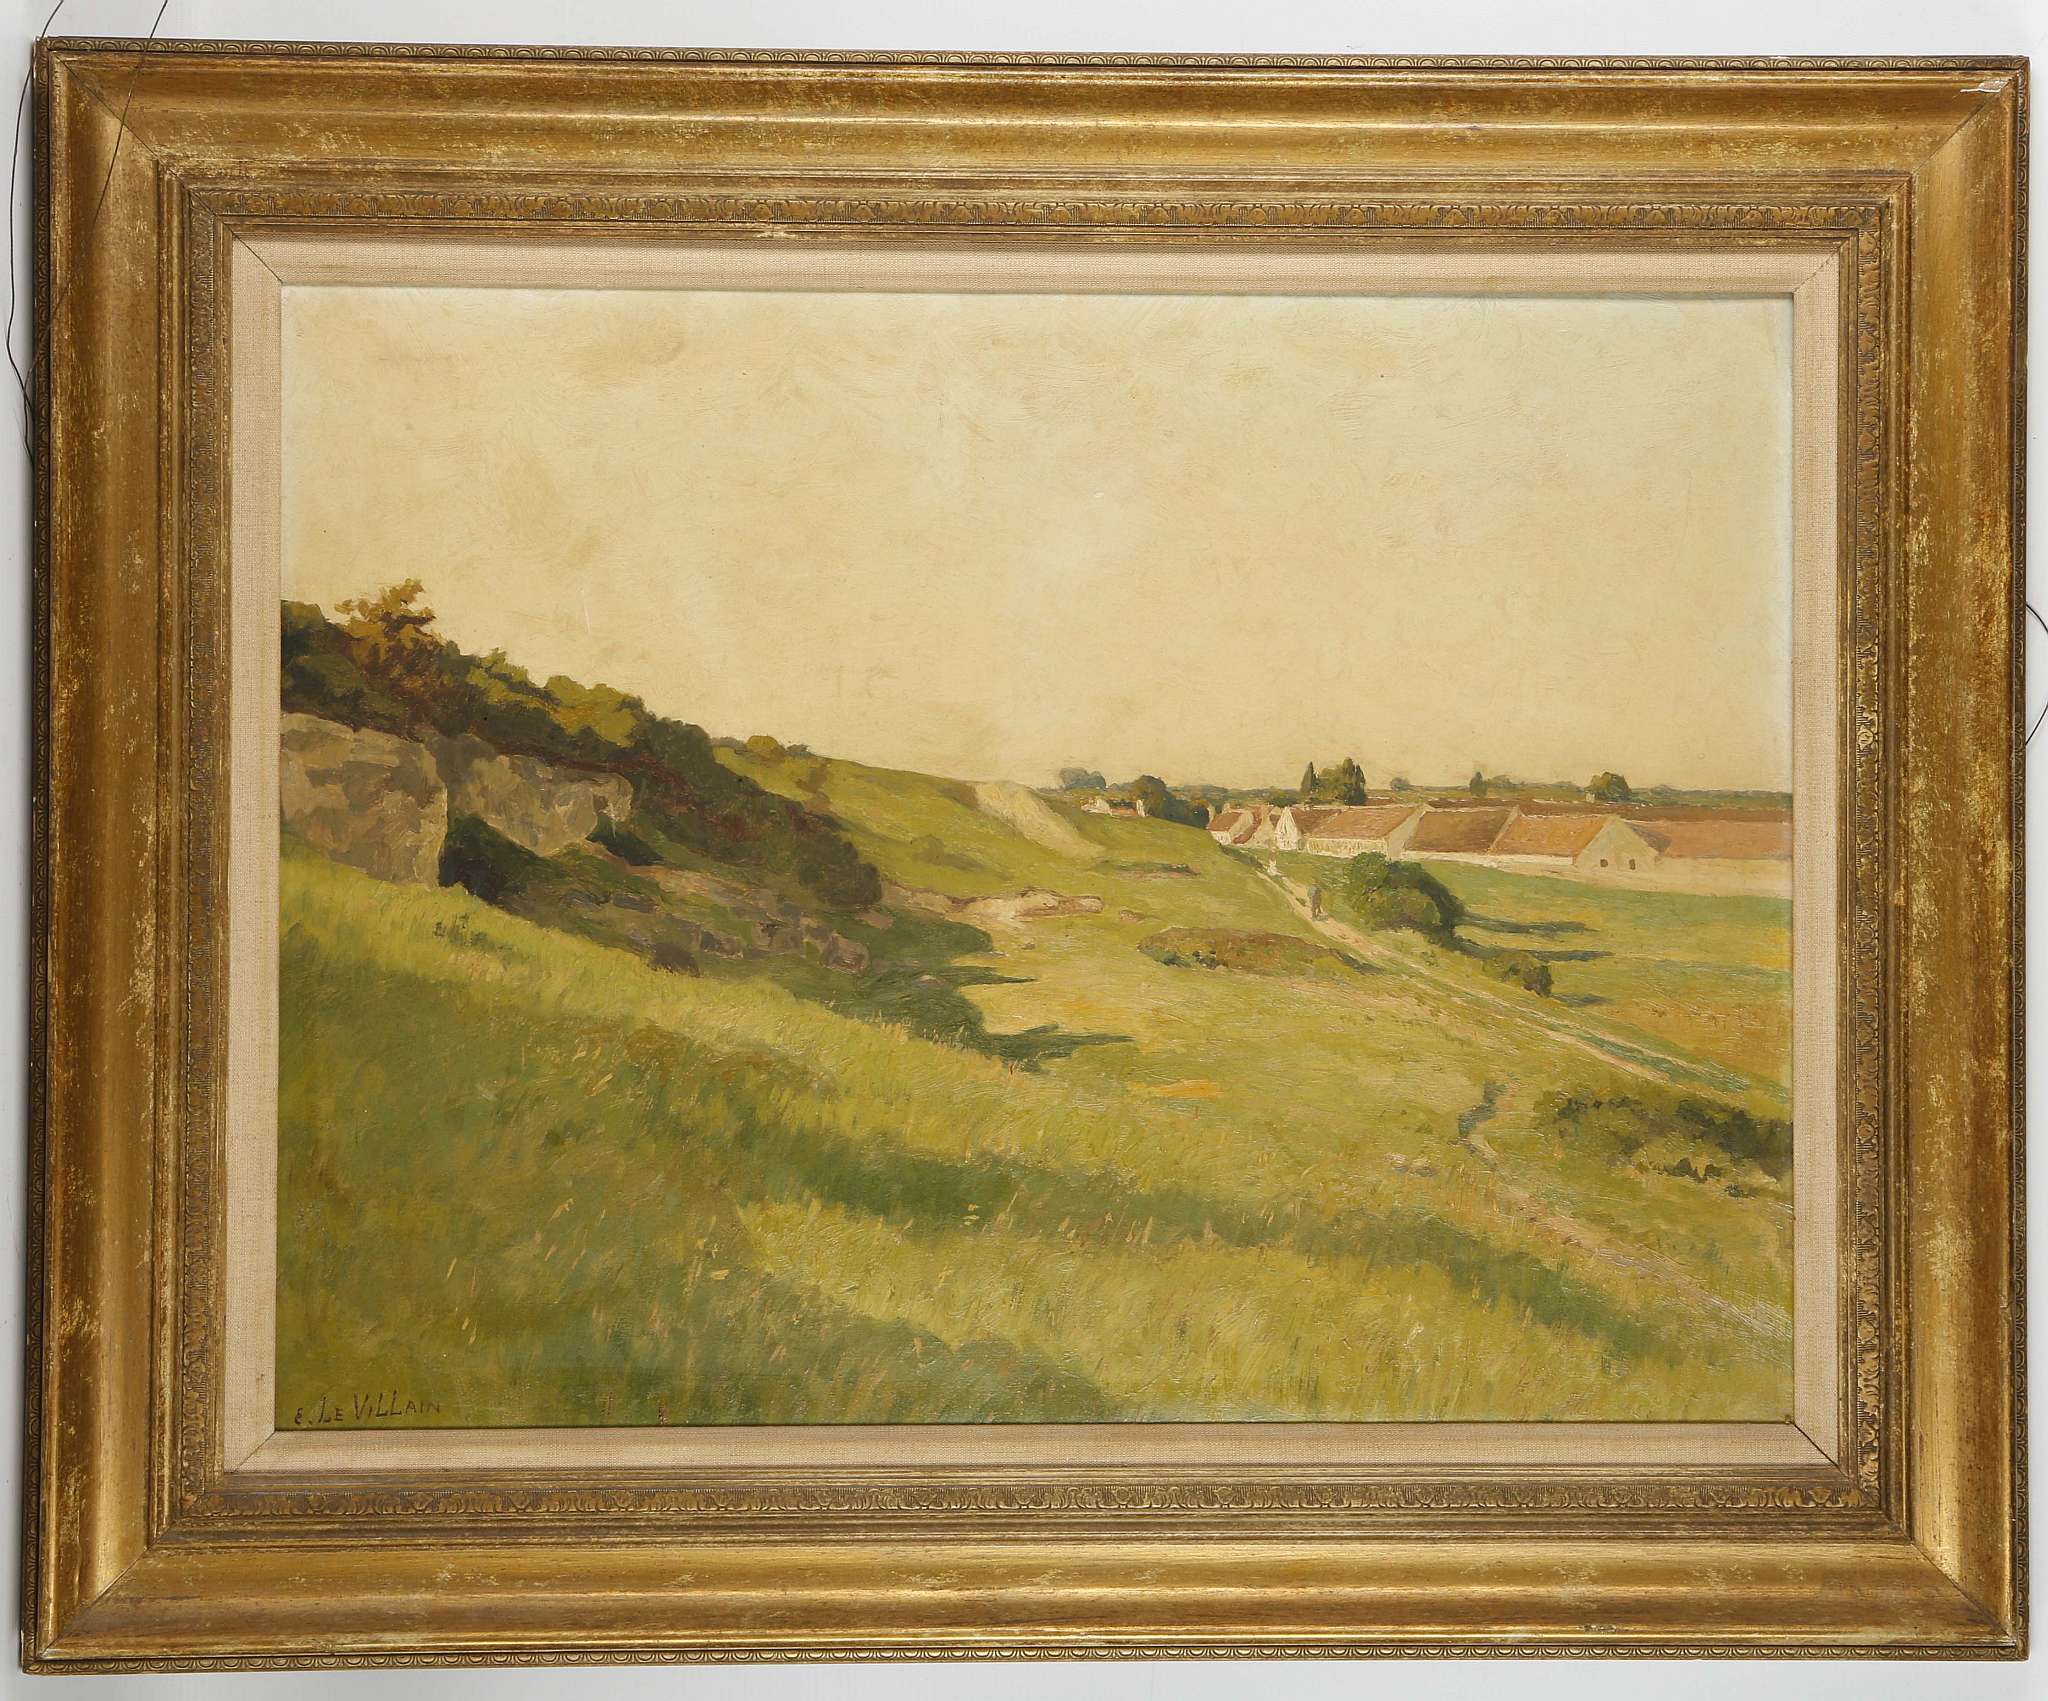 After Ernest Le Villain 1834-1916 French 'Village in the Landscape'', oil on board, signed lower